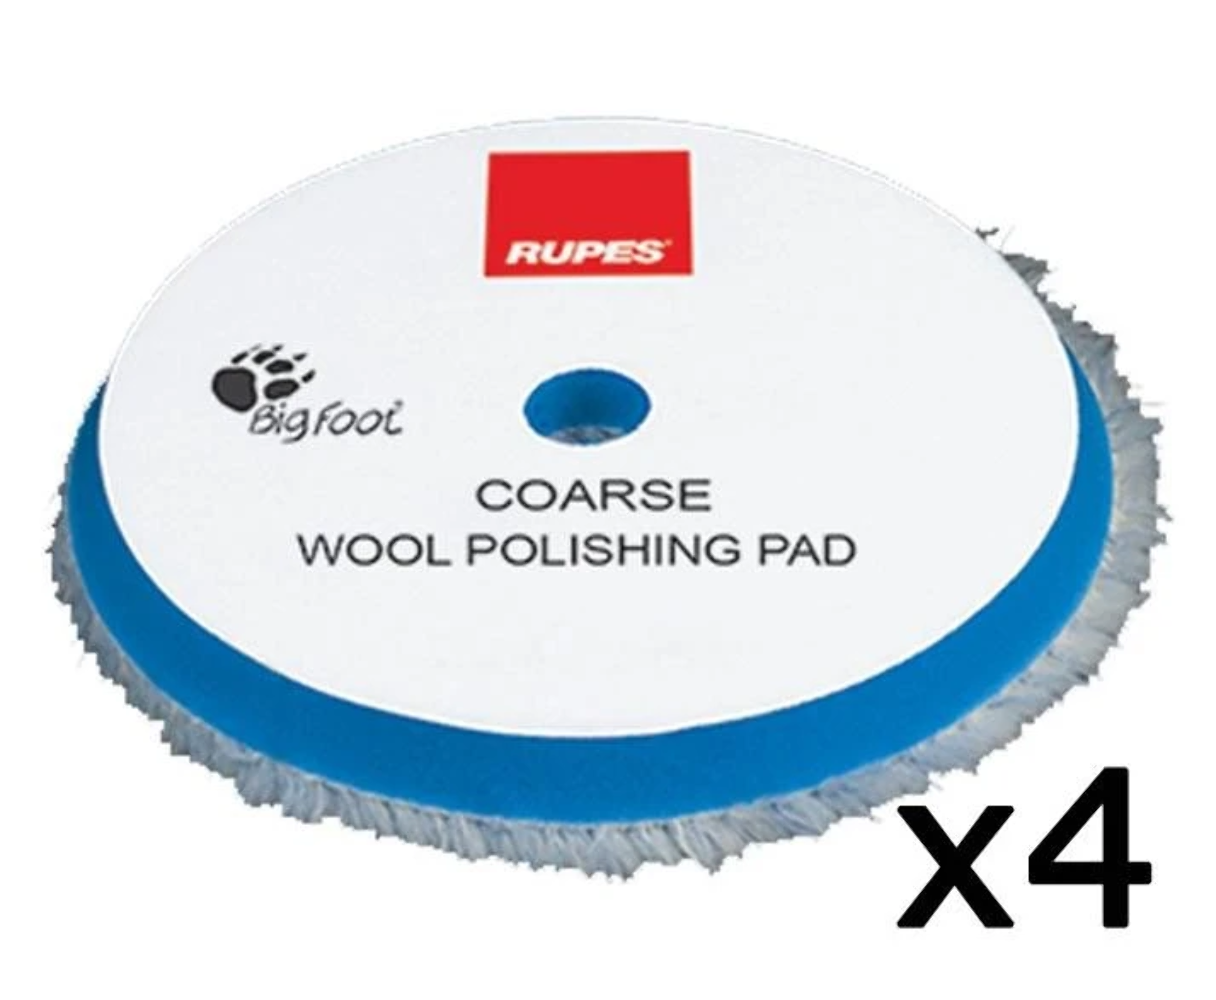 Rupes Bigfoot 70mm Coarse Blue Wool Polishing Pad 9.BW70H Hook & Loop Box of 4